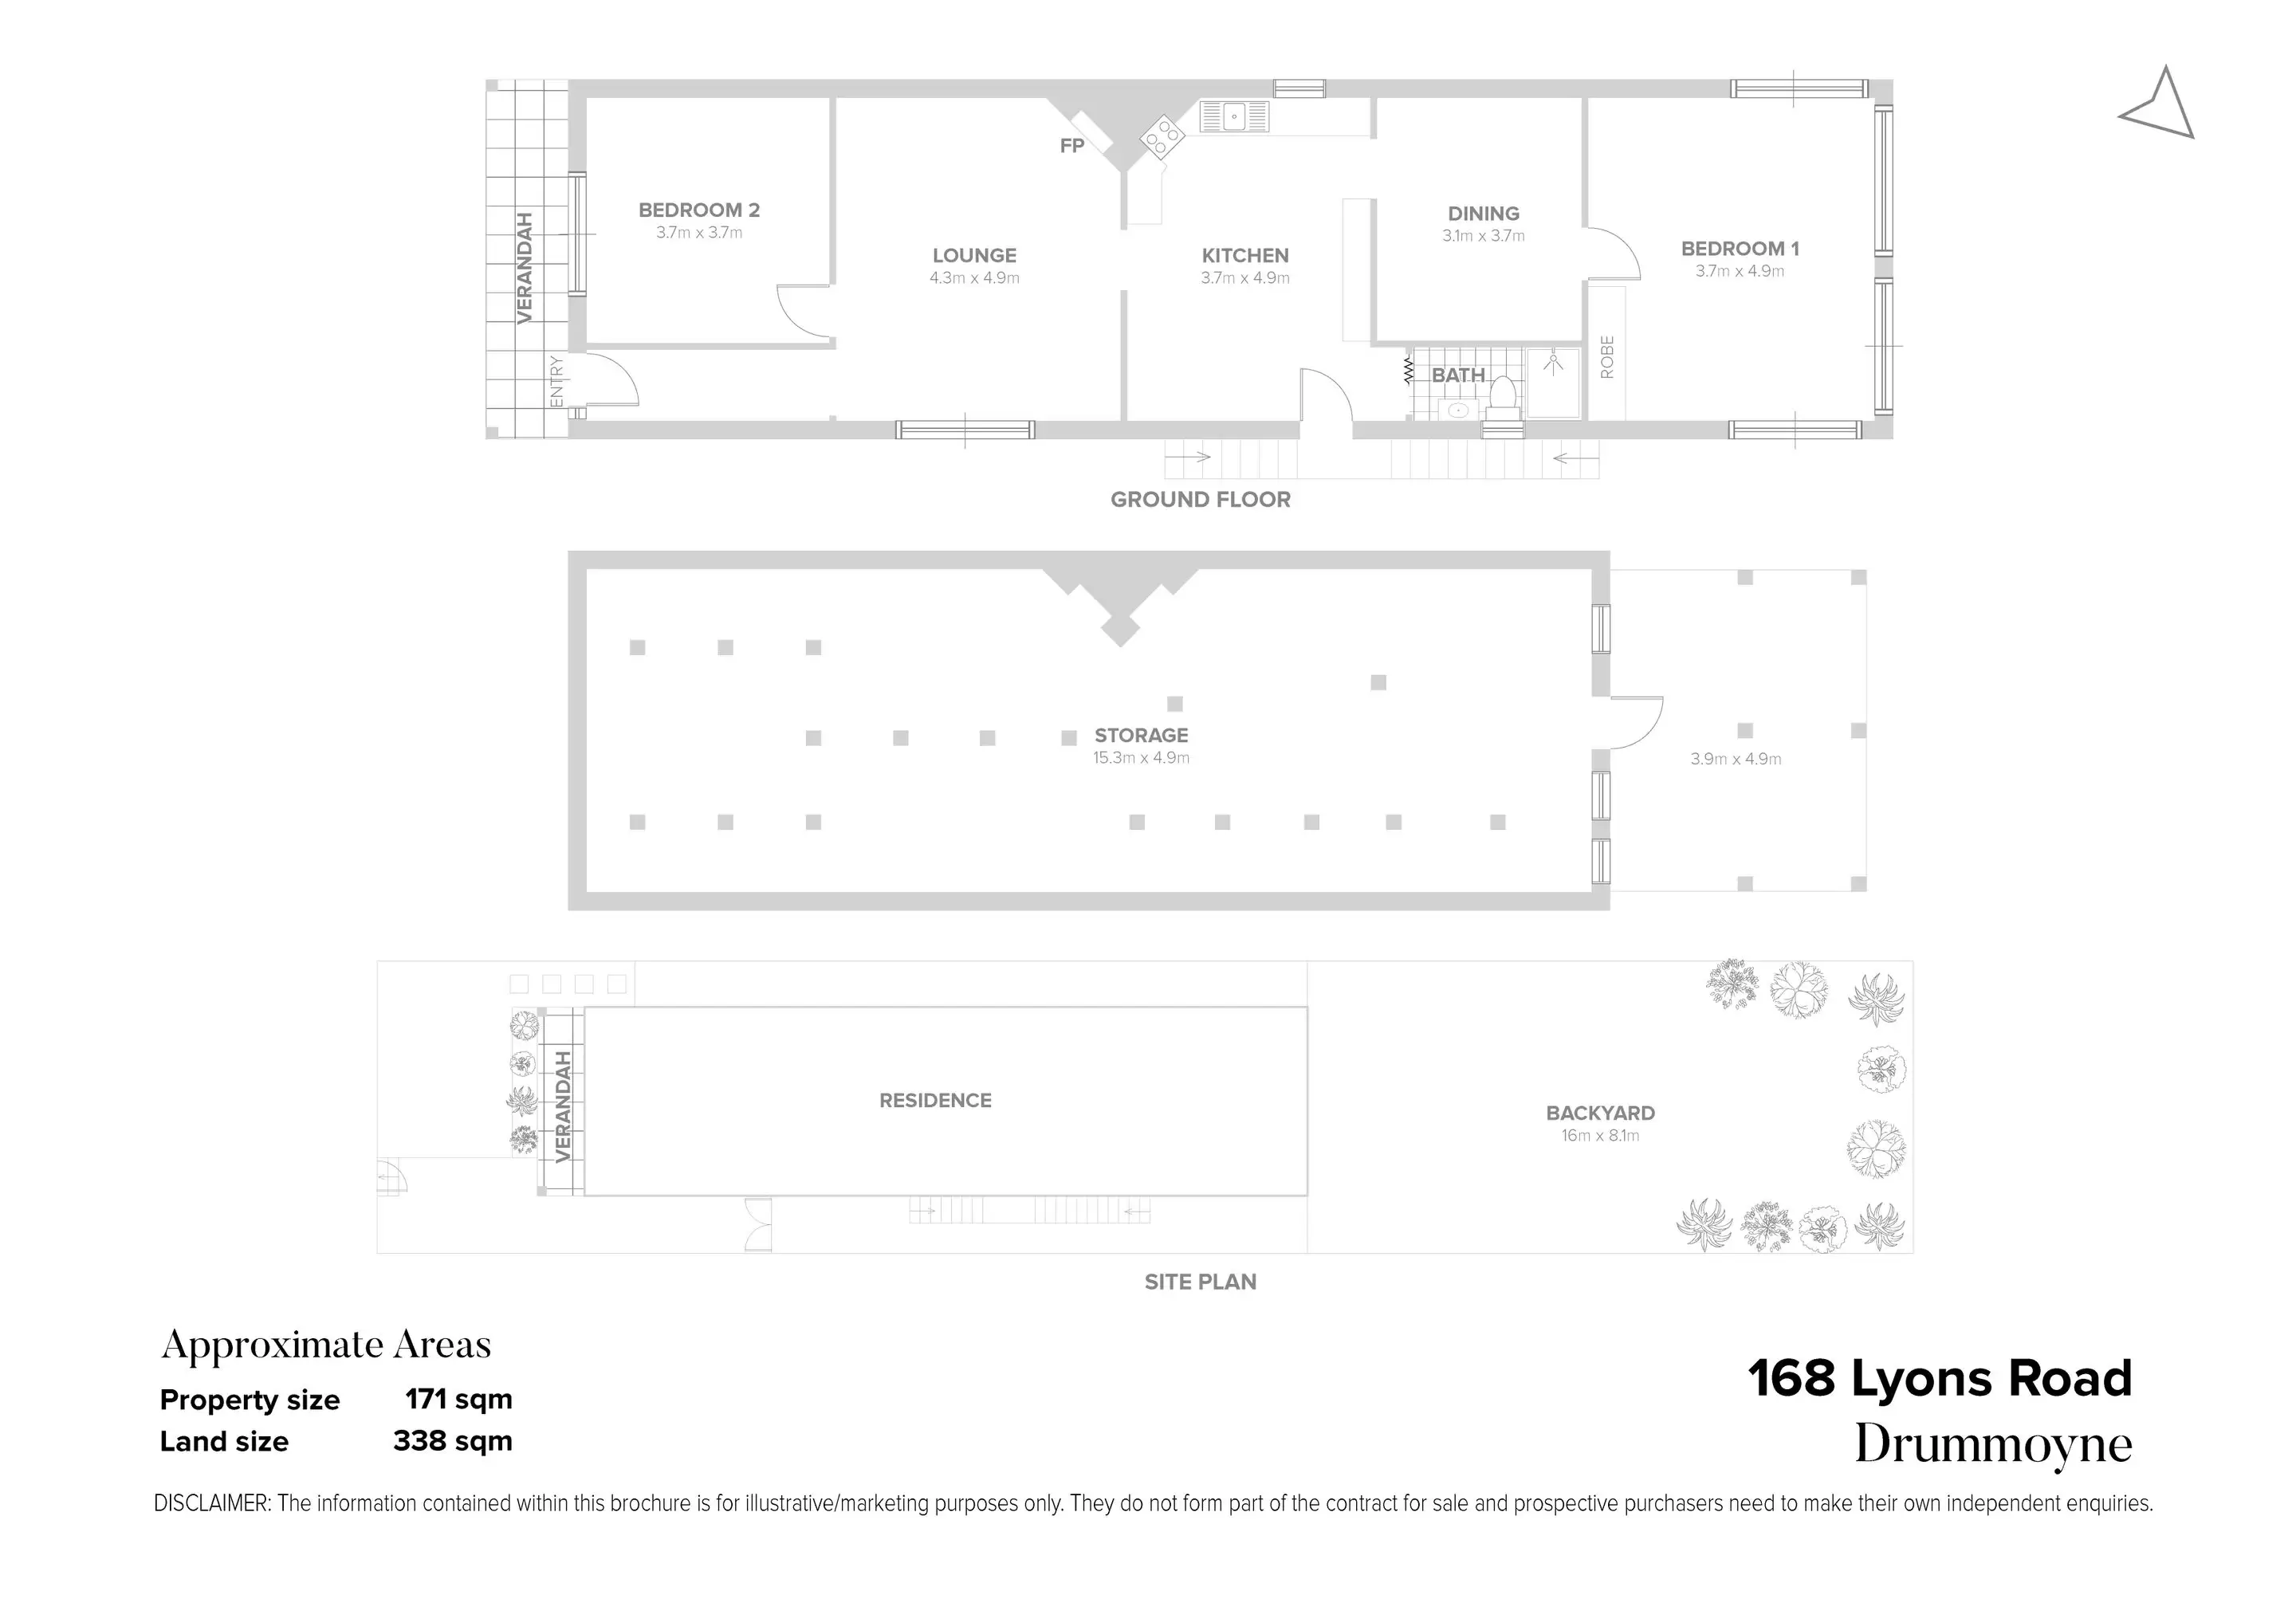 168 Lyons Road, Drummoyne Sold by Chidiac Realty - floorplan